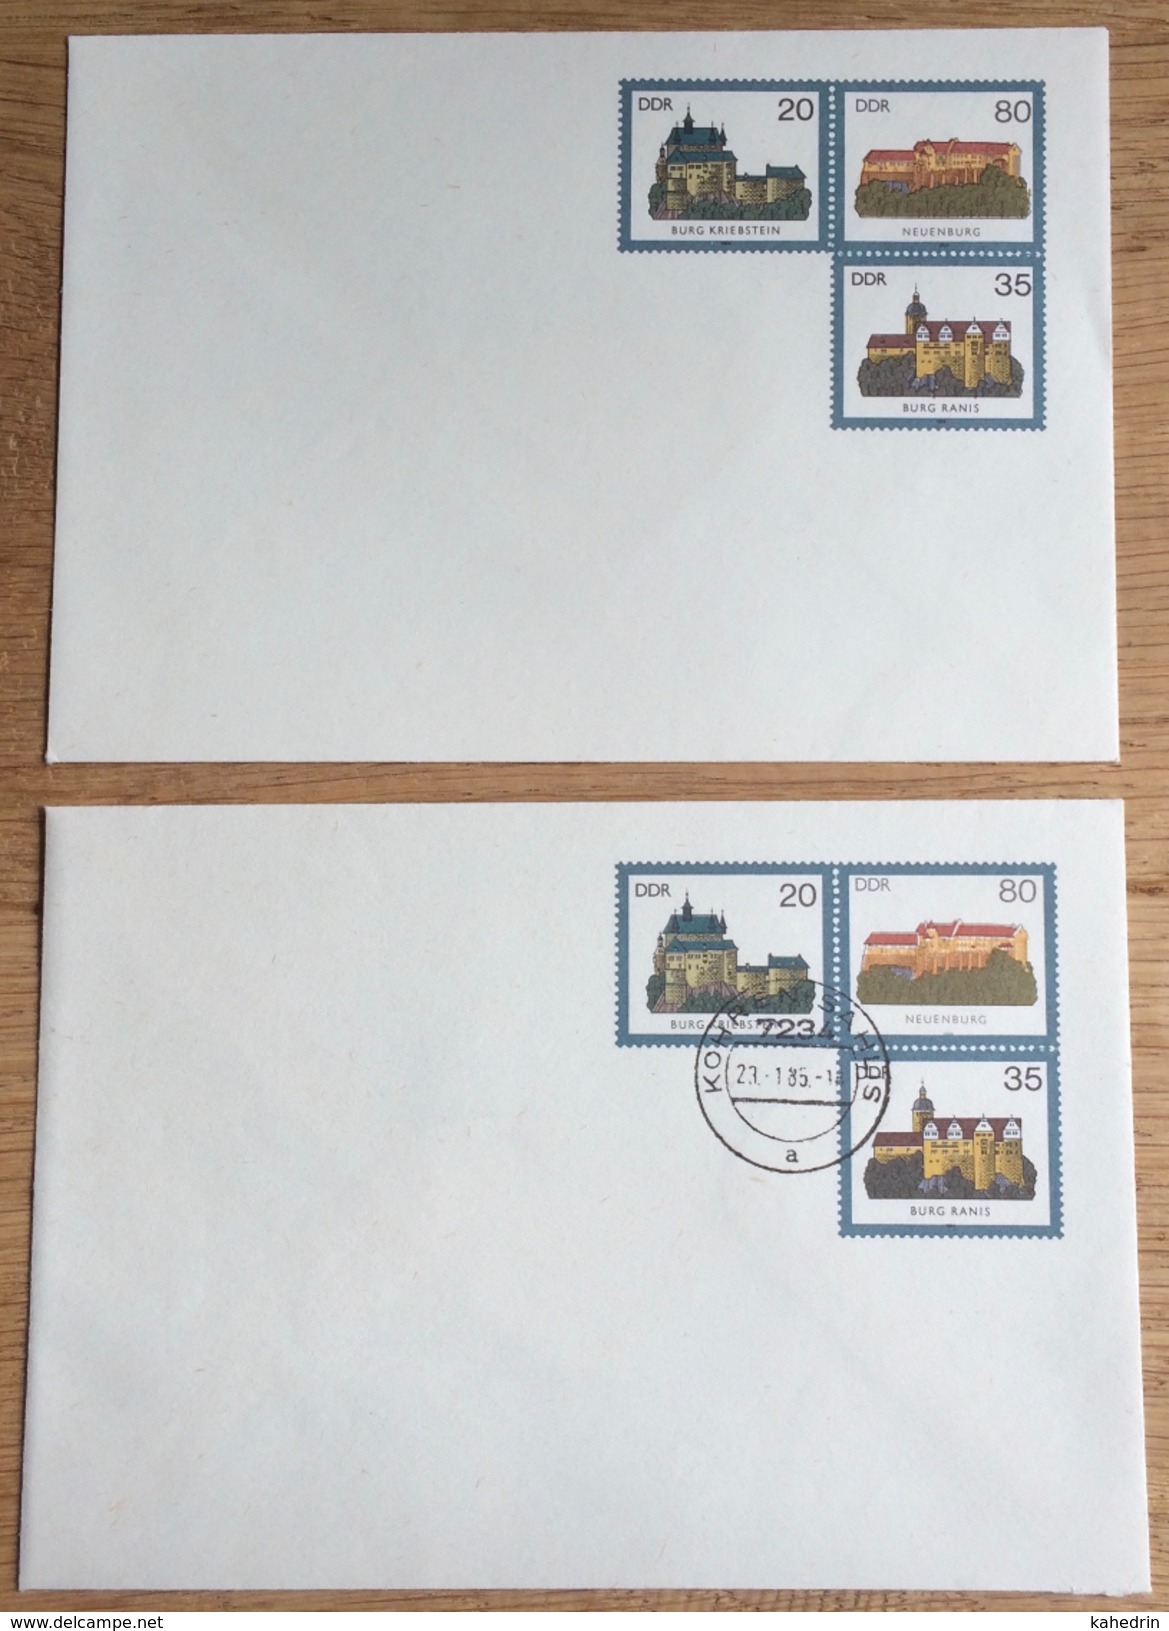 DDR 1985, Kohren-Sahlis 7234, 2 Covers Burg Kriebstein Neuenburg Ranis ** / (o) - Enveloppes - Oblitérées